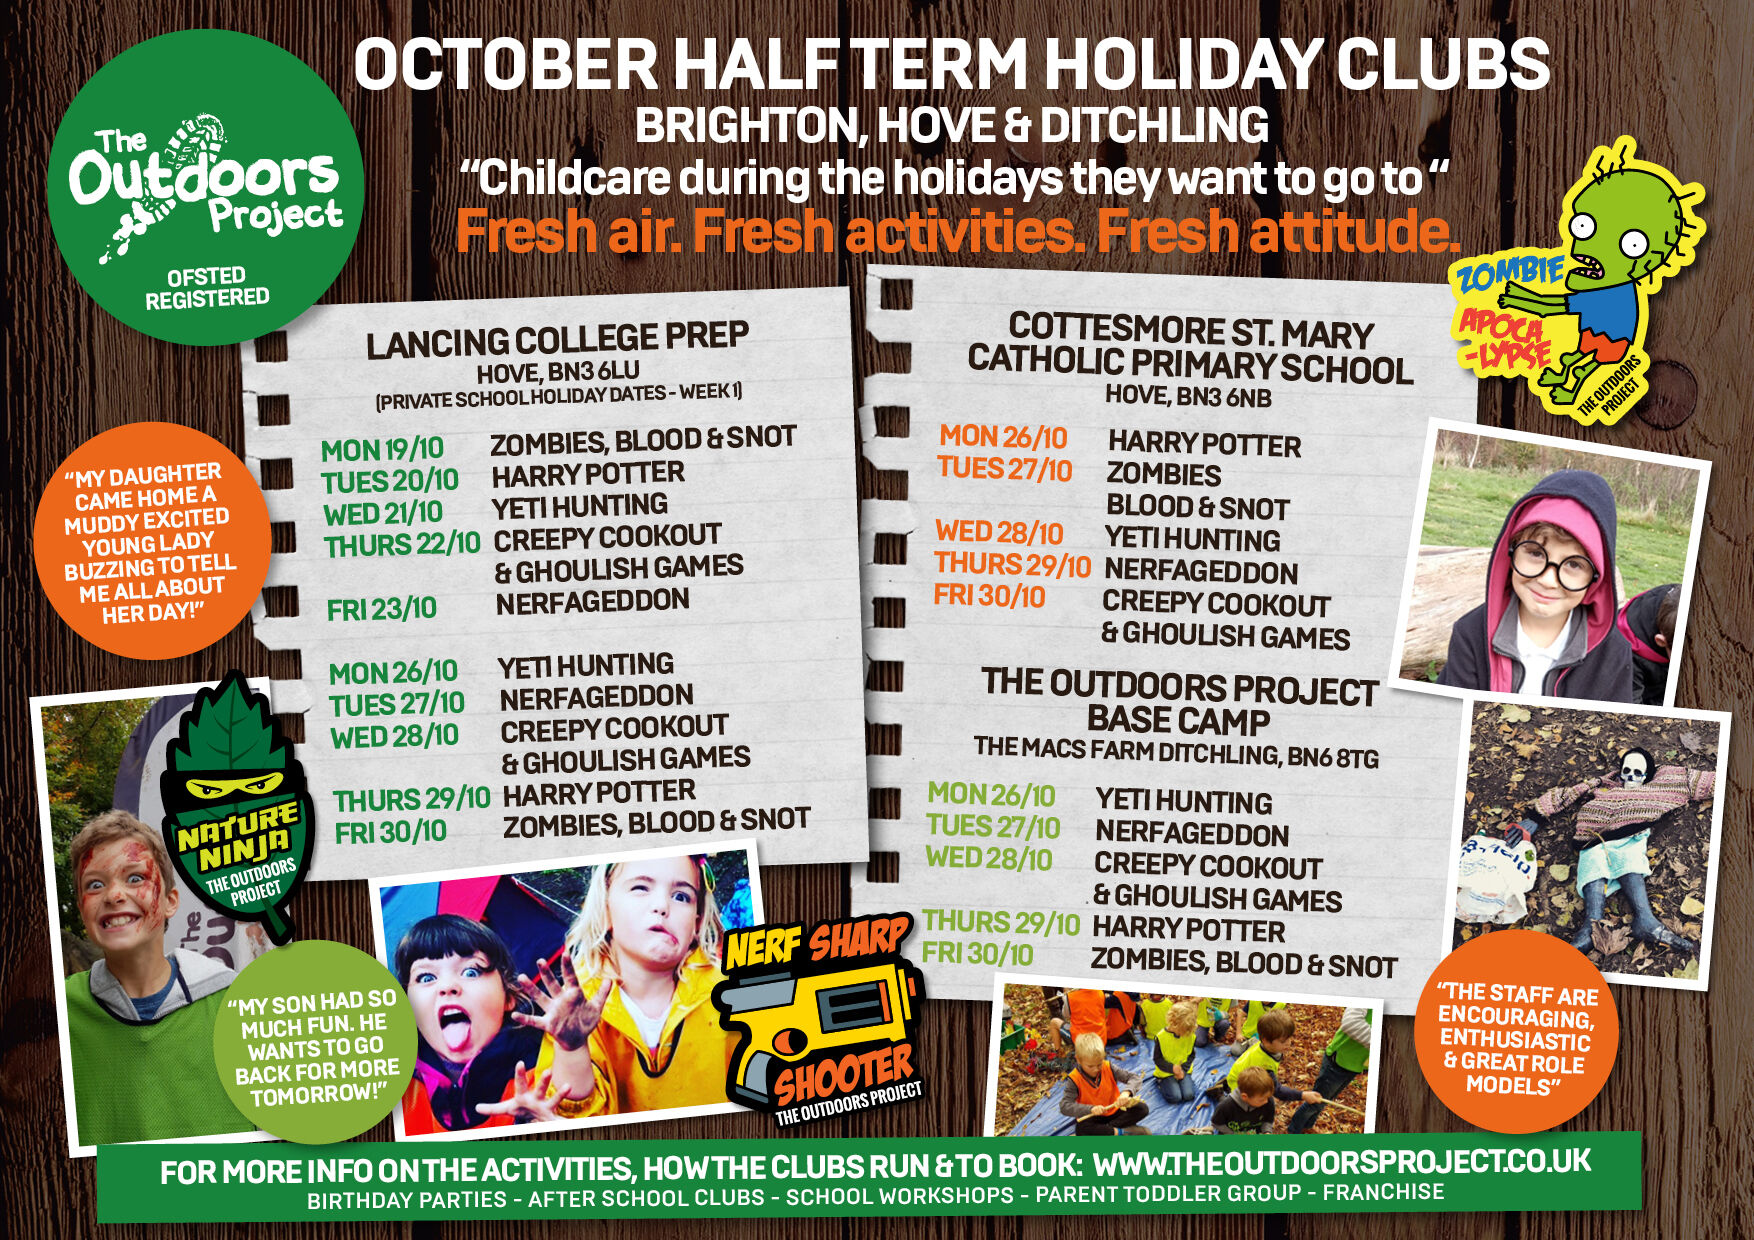 Brighton & Hove October Half Term Holiday Clubs